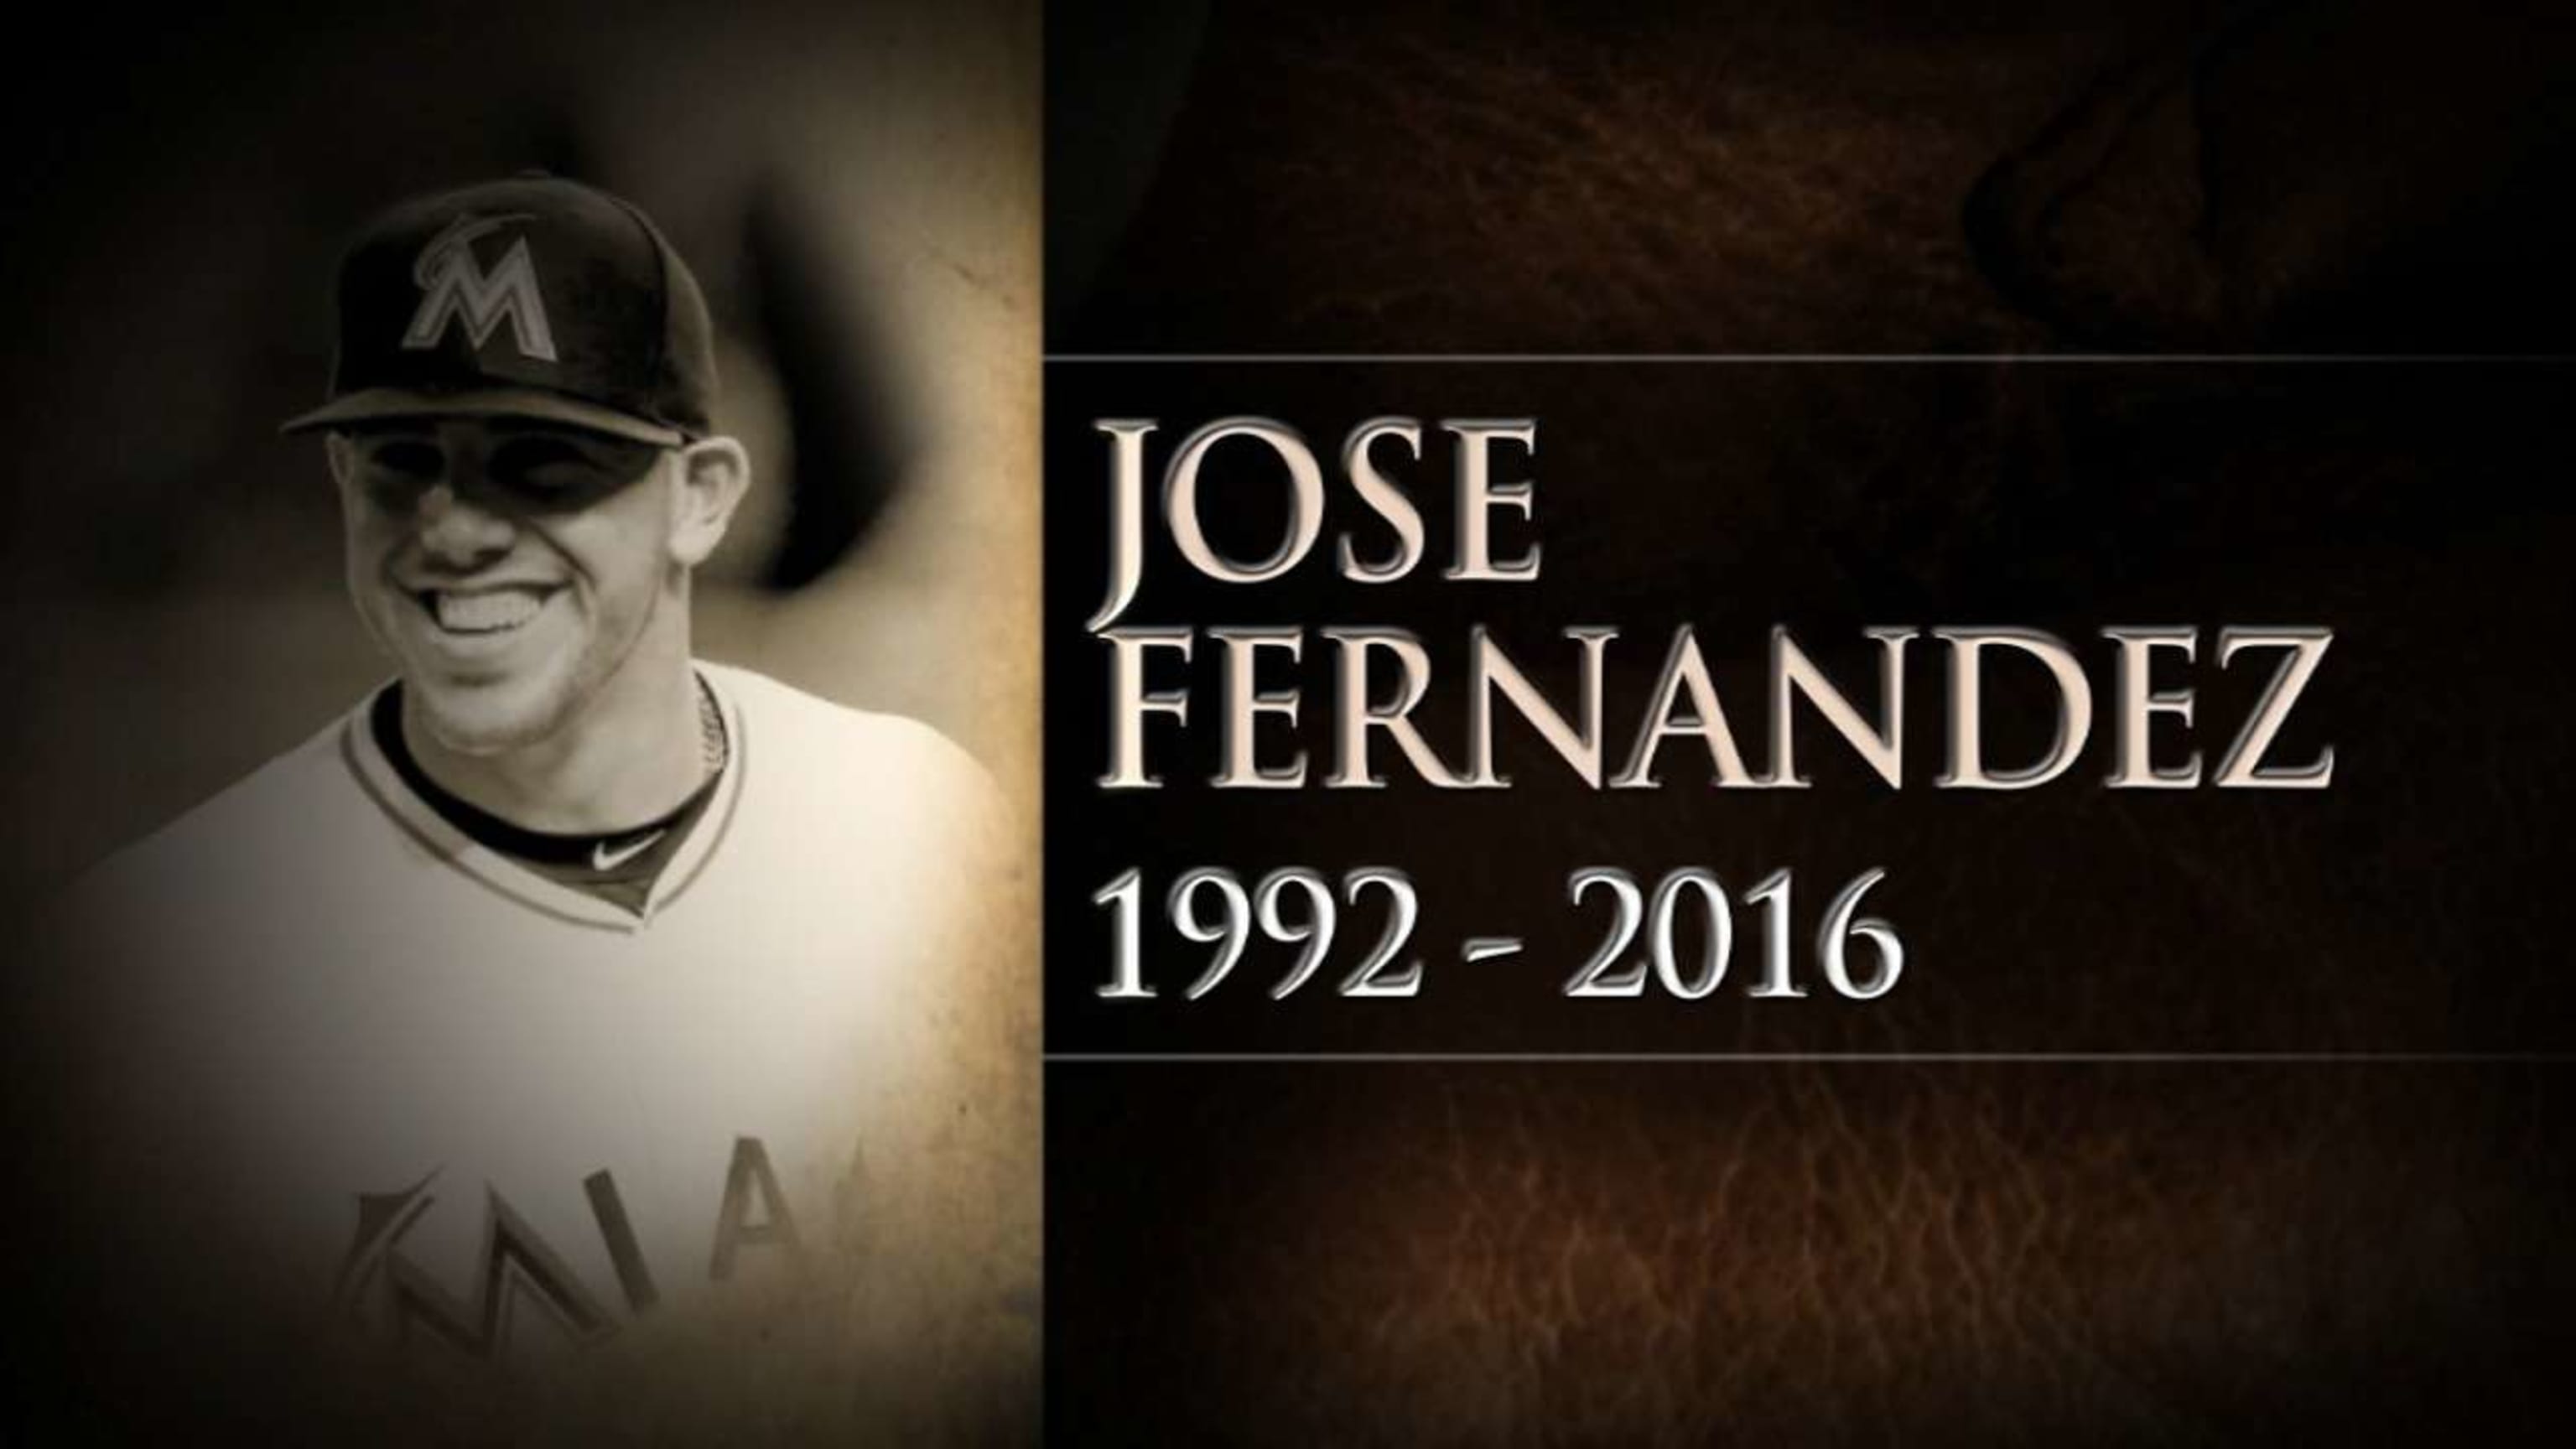 Emotion Takes Center Stage After Tragic Loss of Jose Fernandez